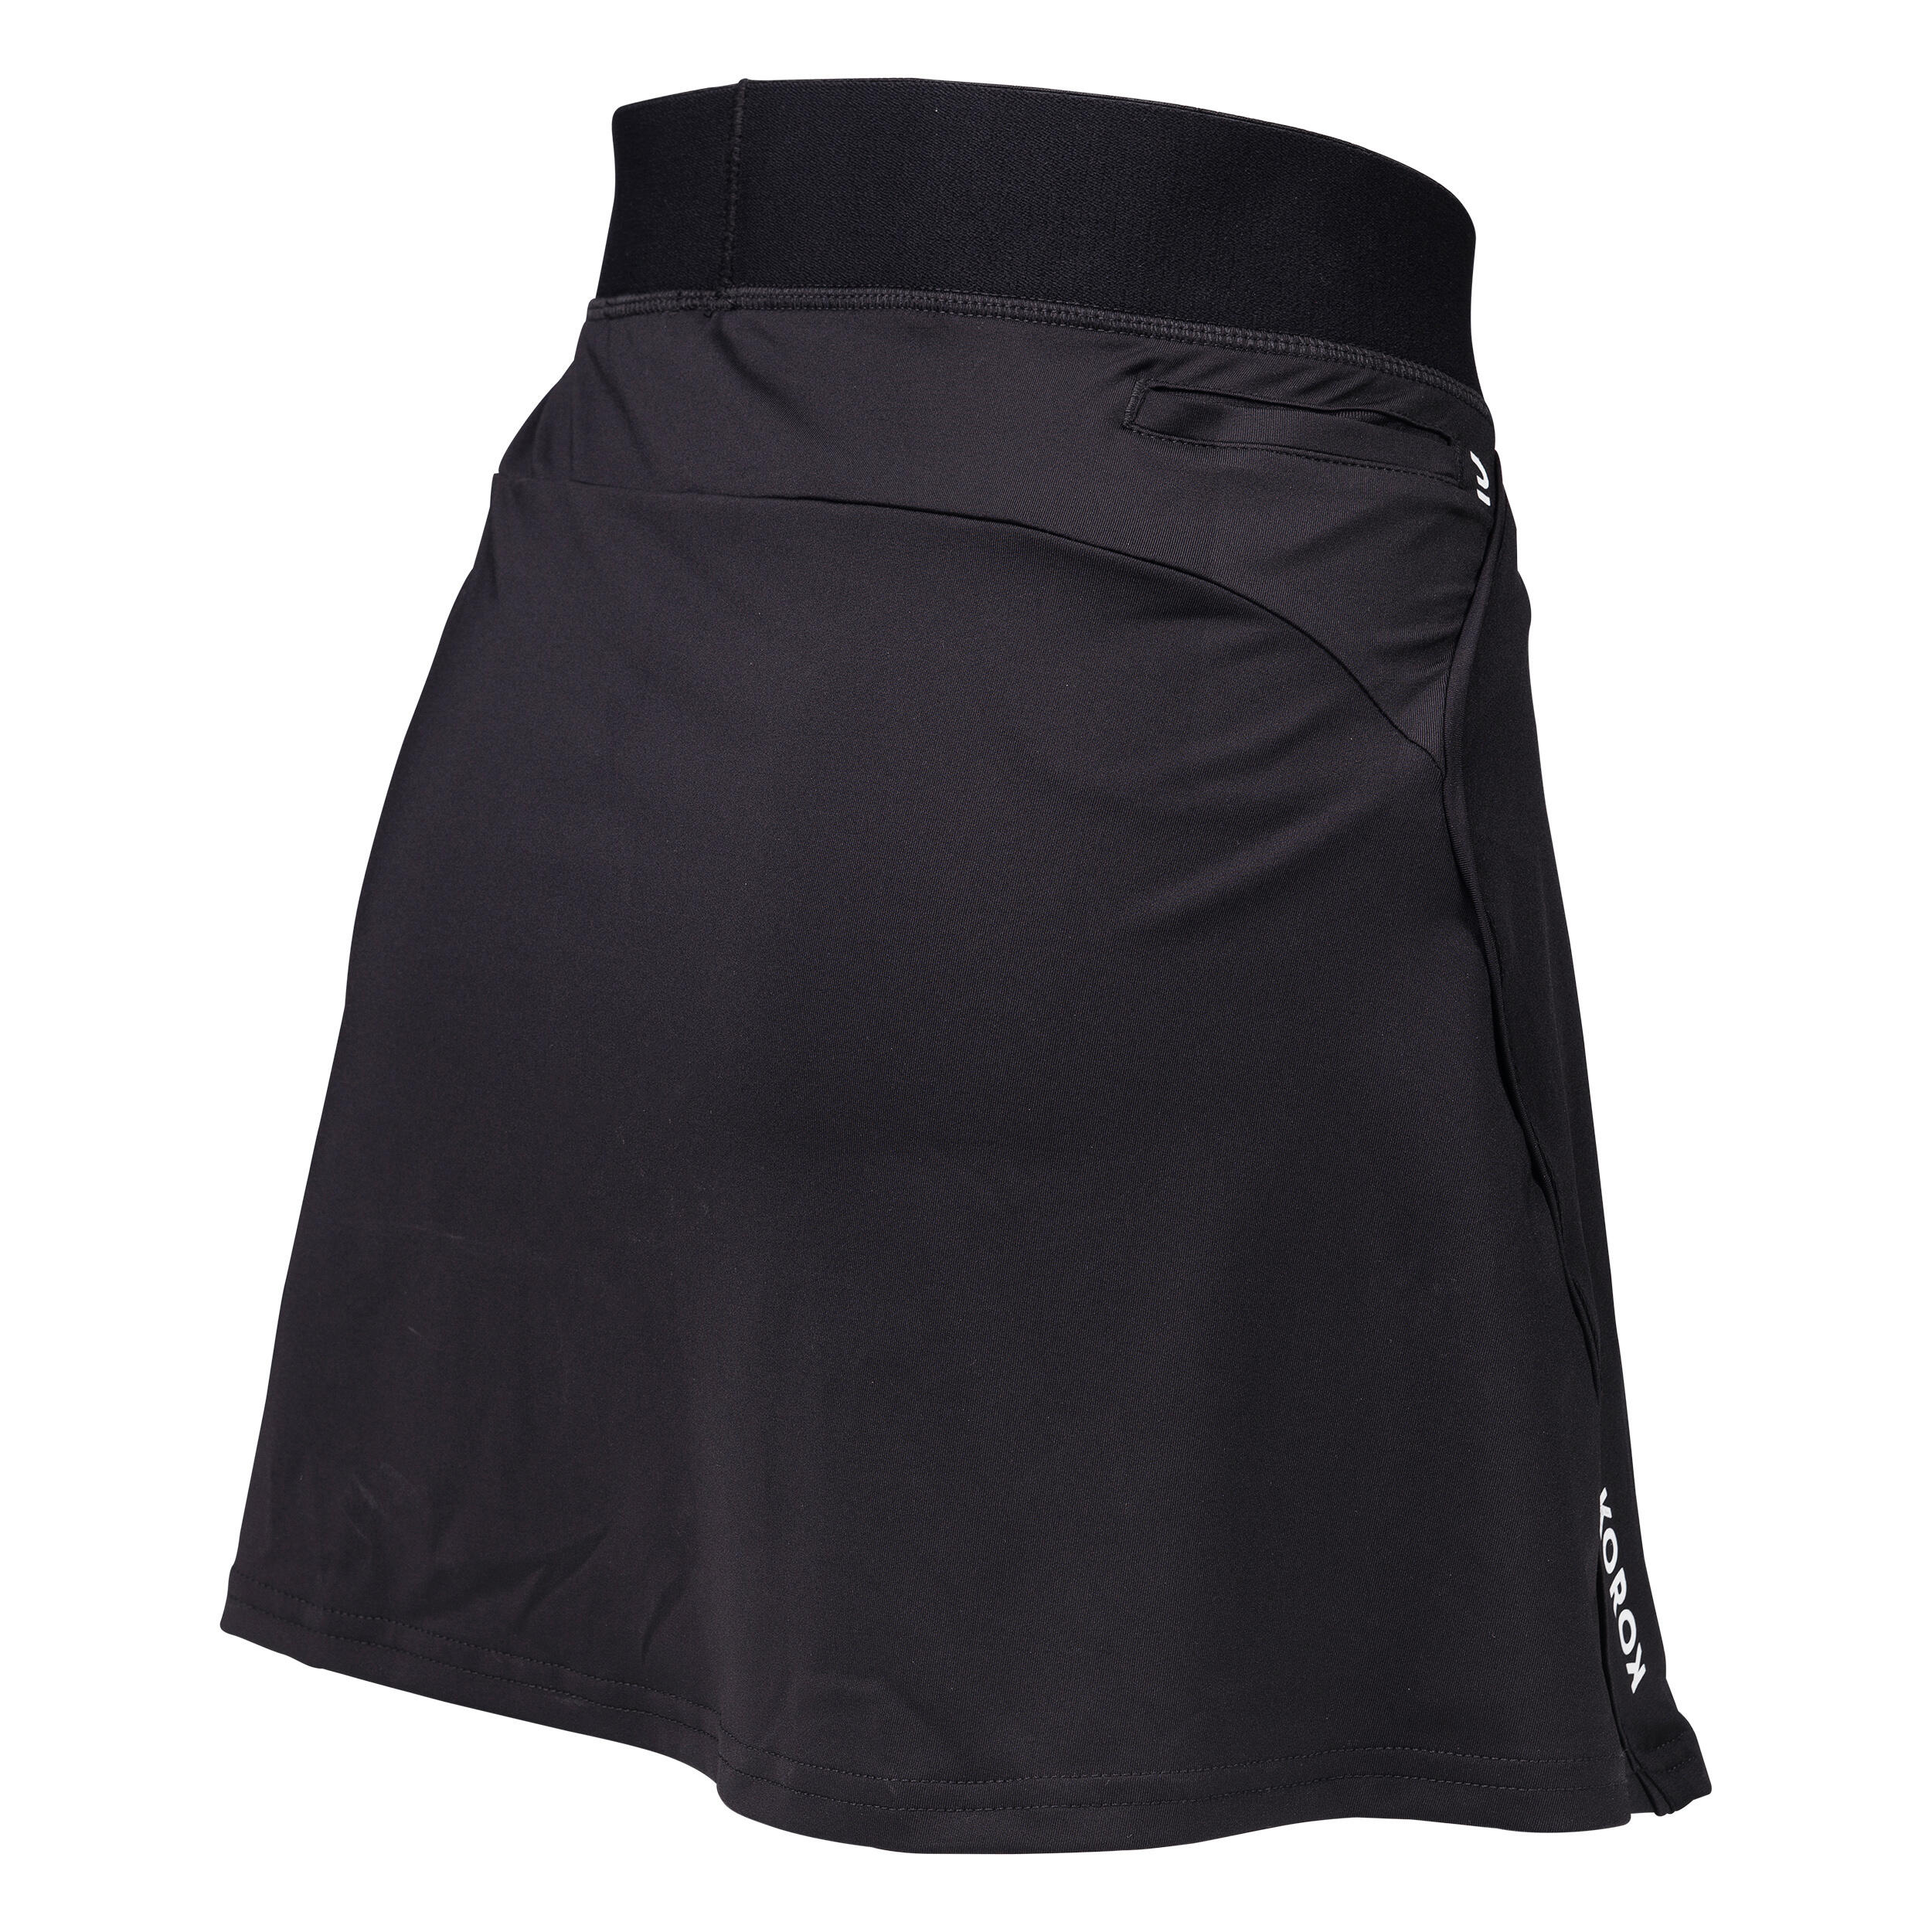 Women's High-Intensity Field Hockey Skirt FH900 - Black 3/4